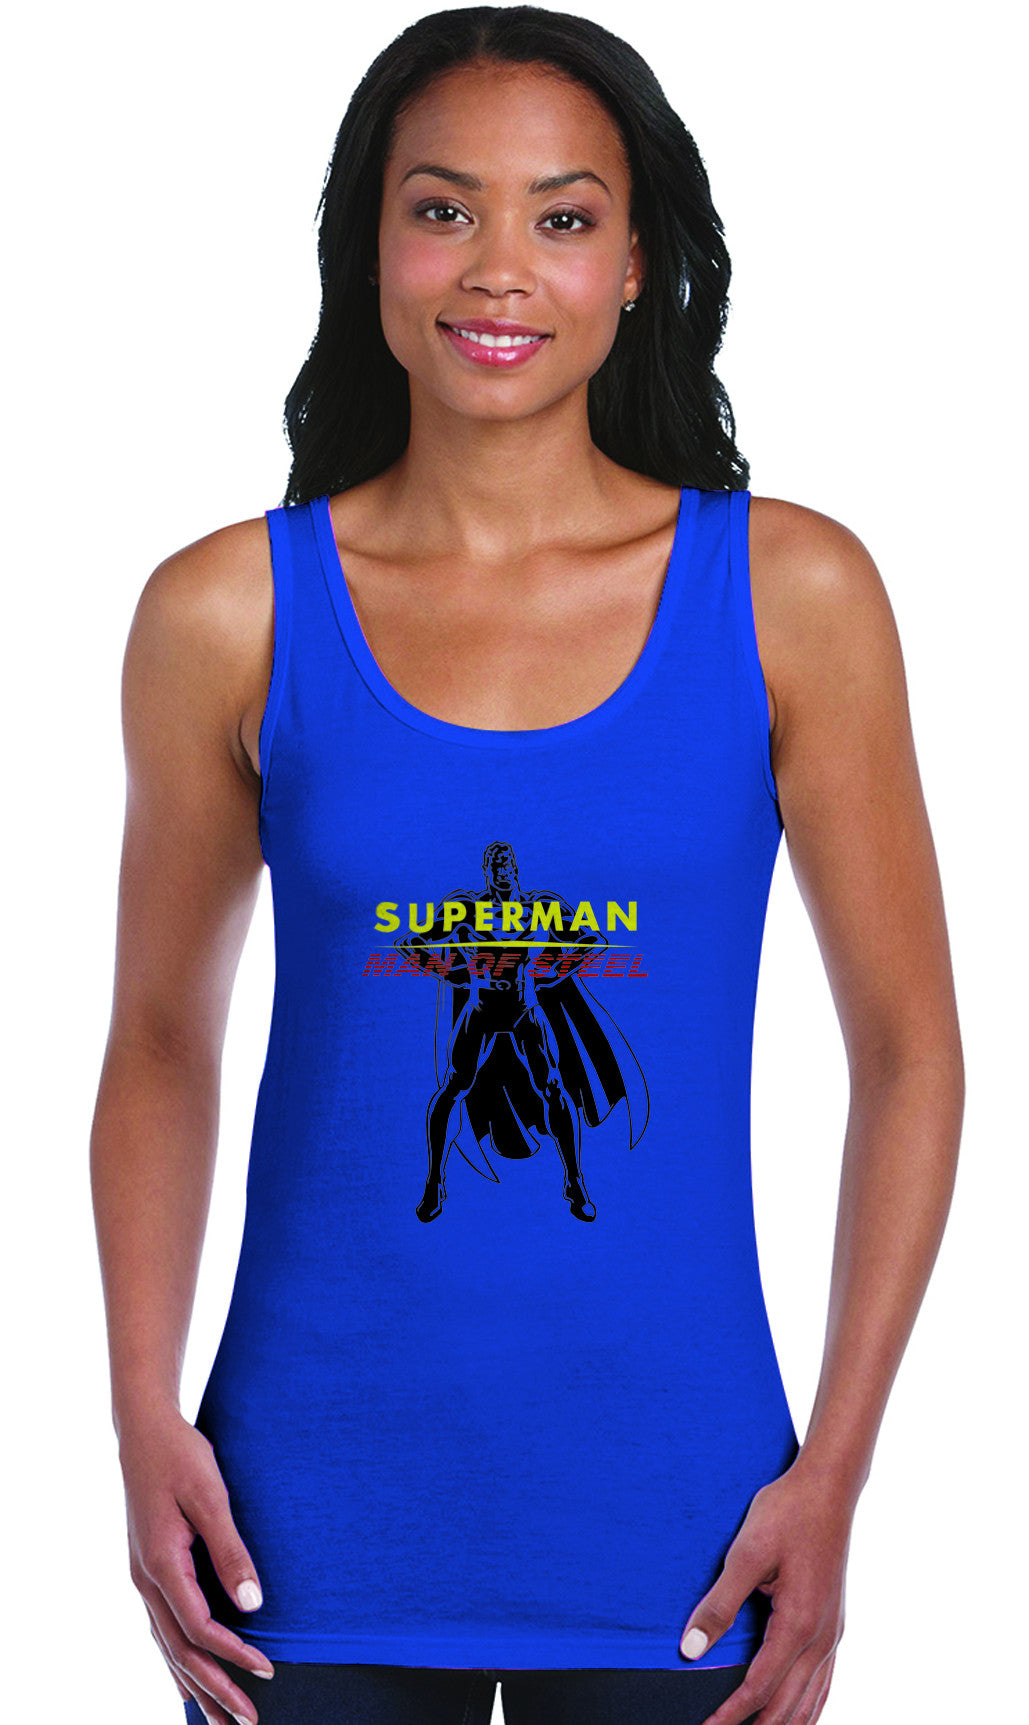 Superman Man Of Steel Standing Figure Logo on Blue Fitted Sheer Tank Top for Women - TshirtNow.net - 1